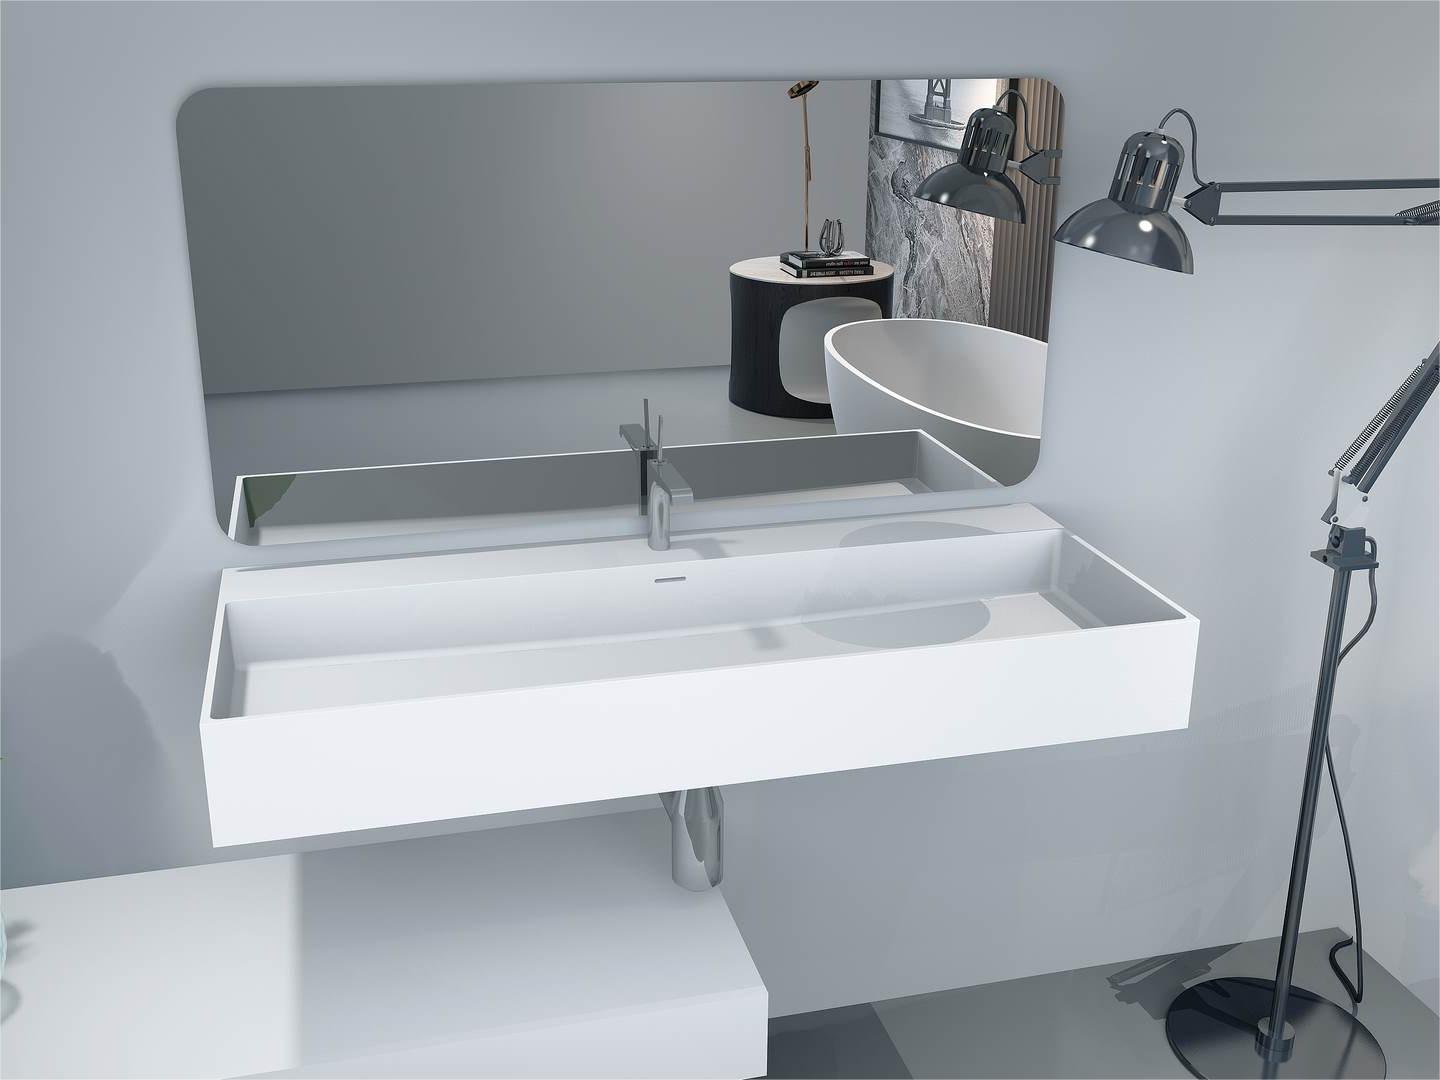 wash basin ideas for bathroom frpm Cpingao 